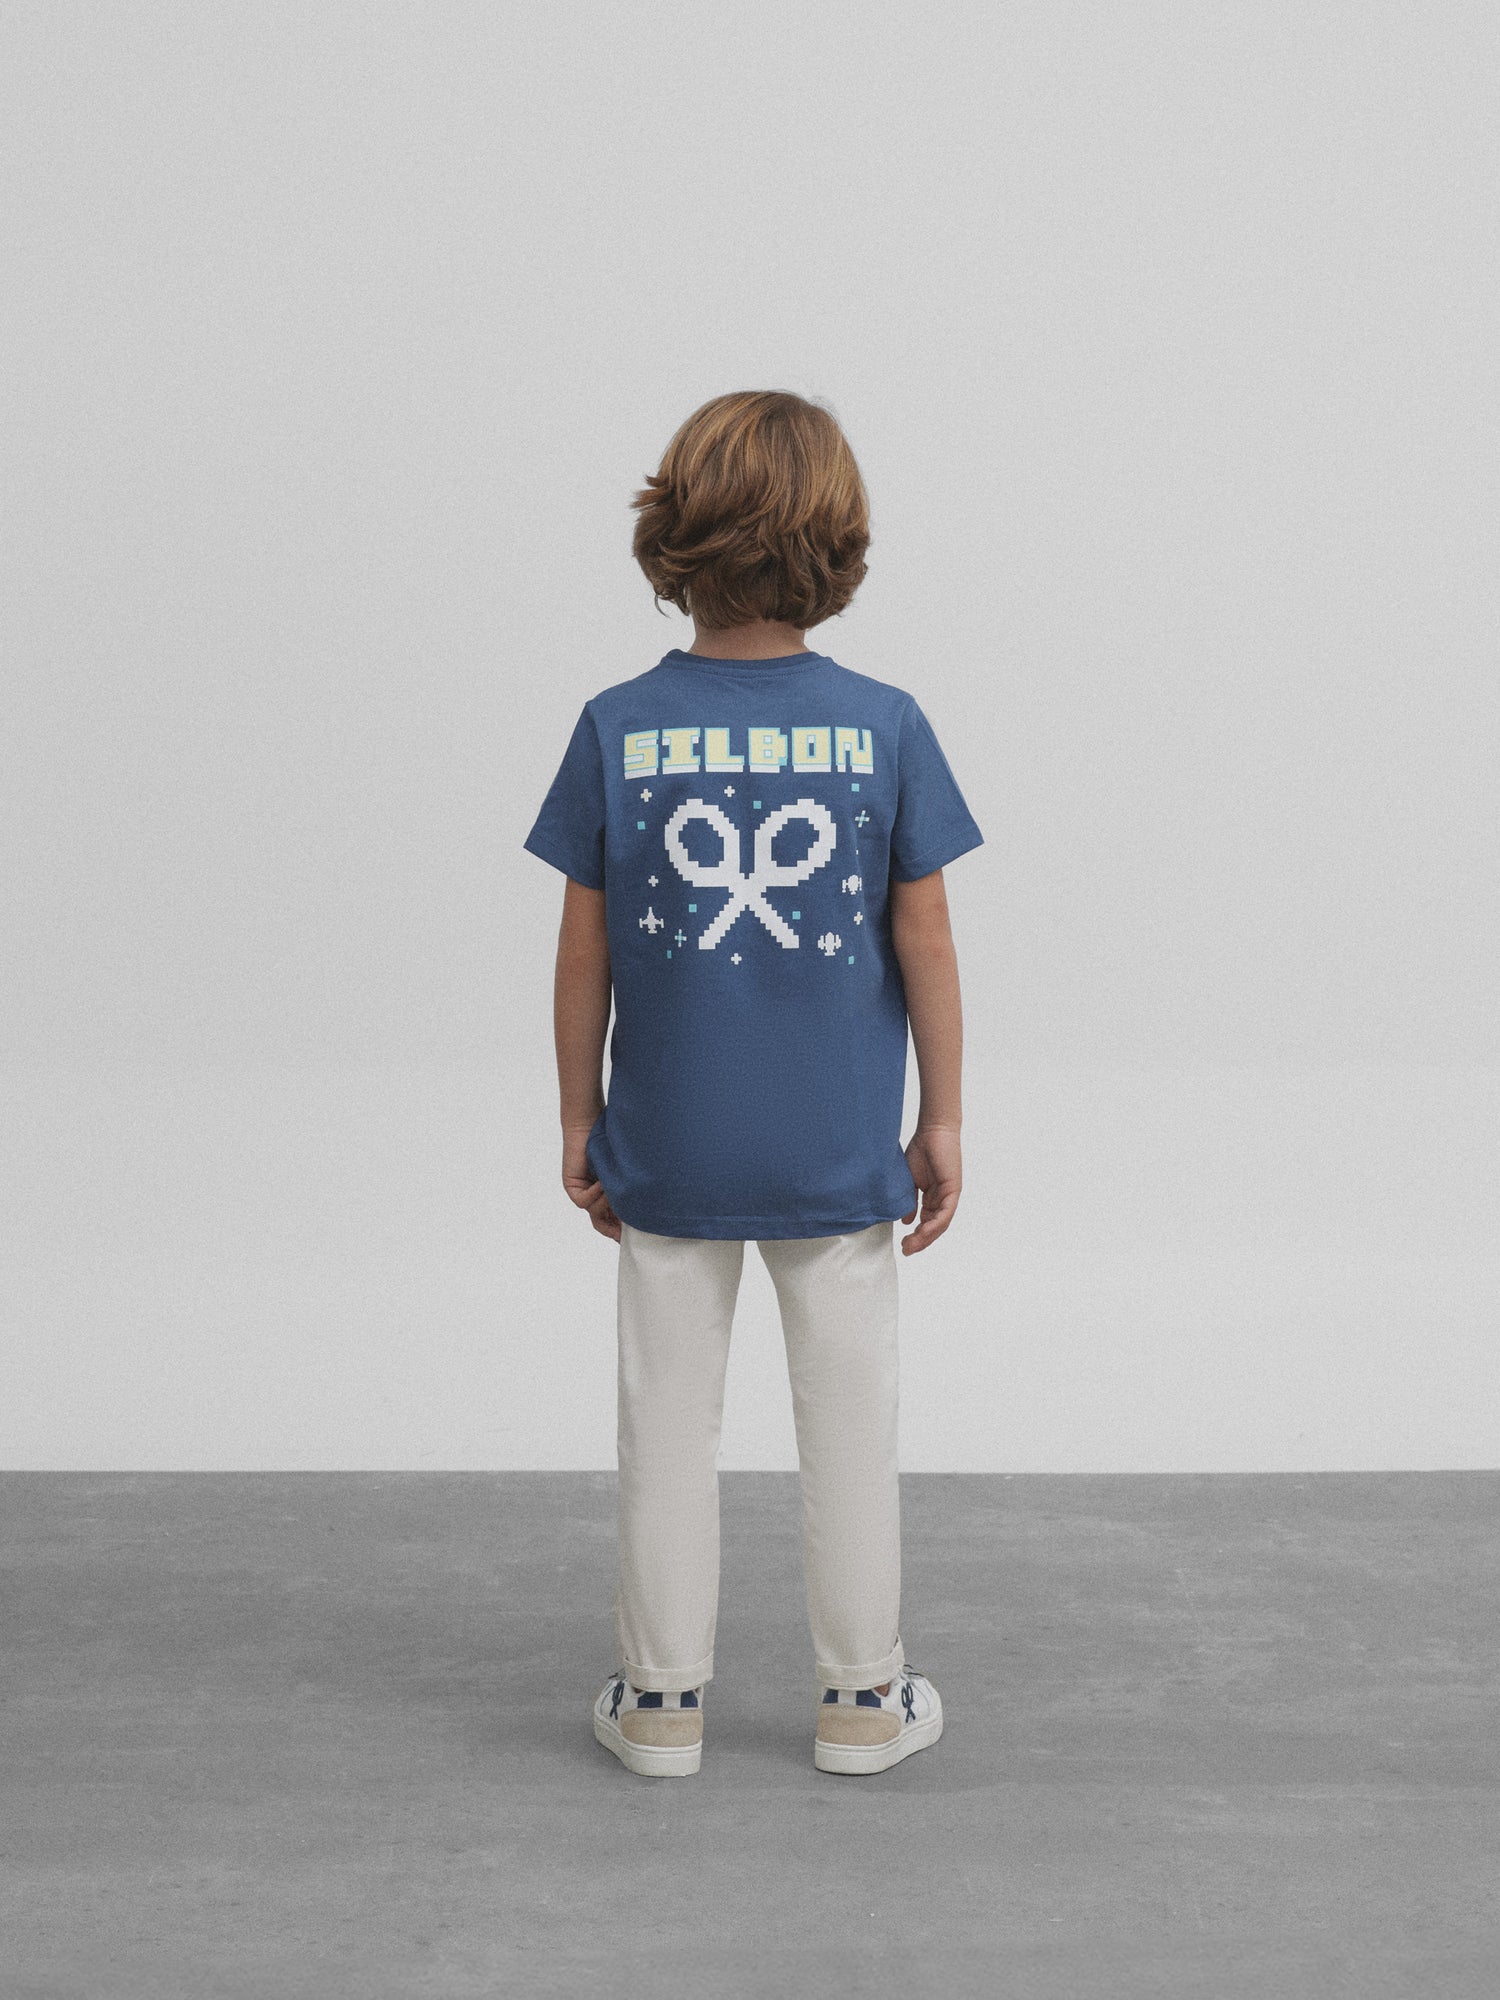 Camiseta kids space invaders azul